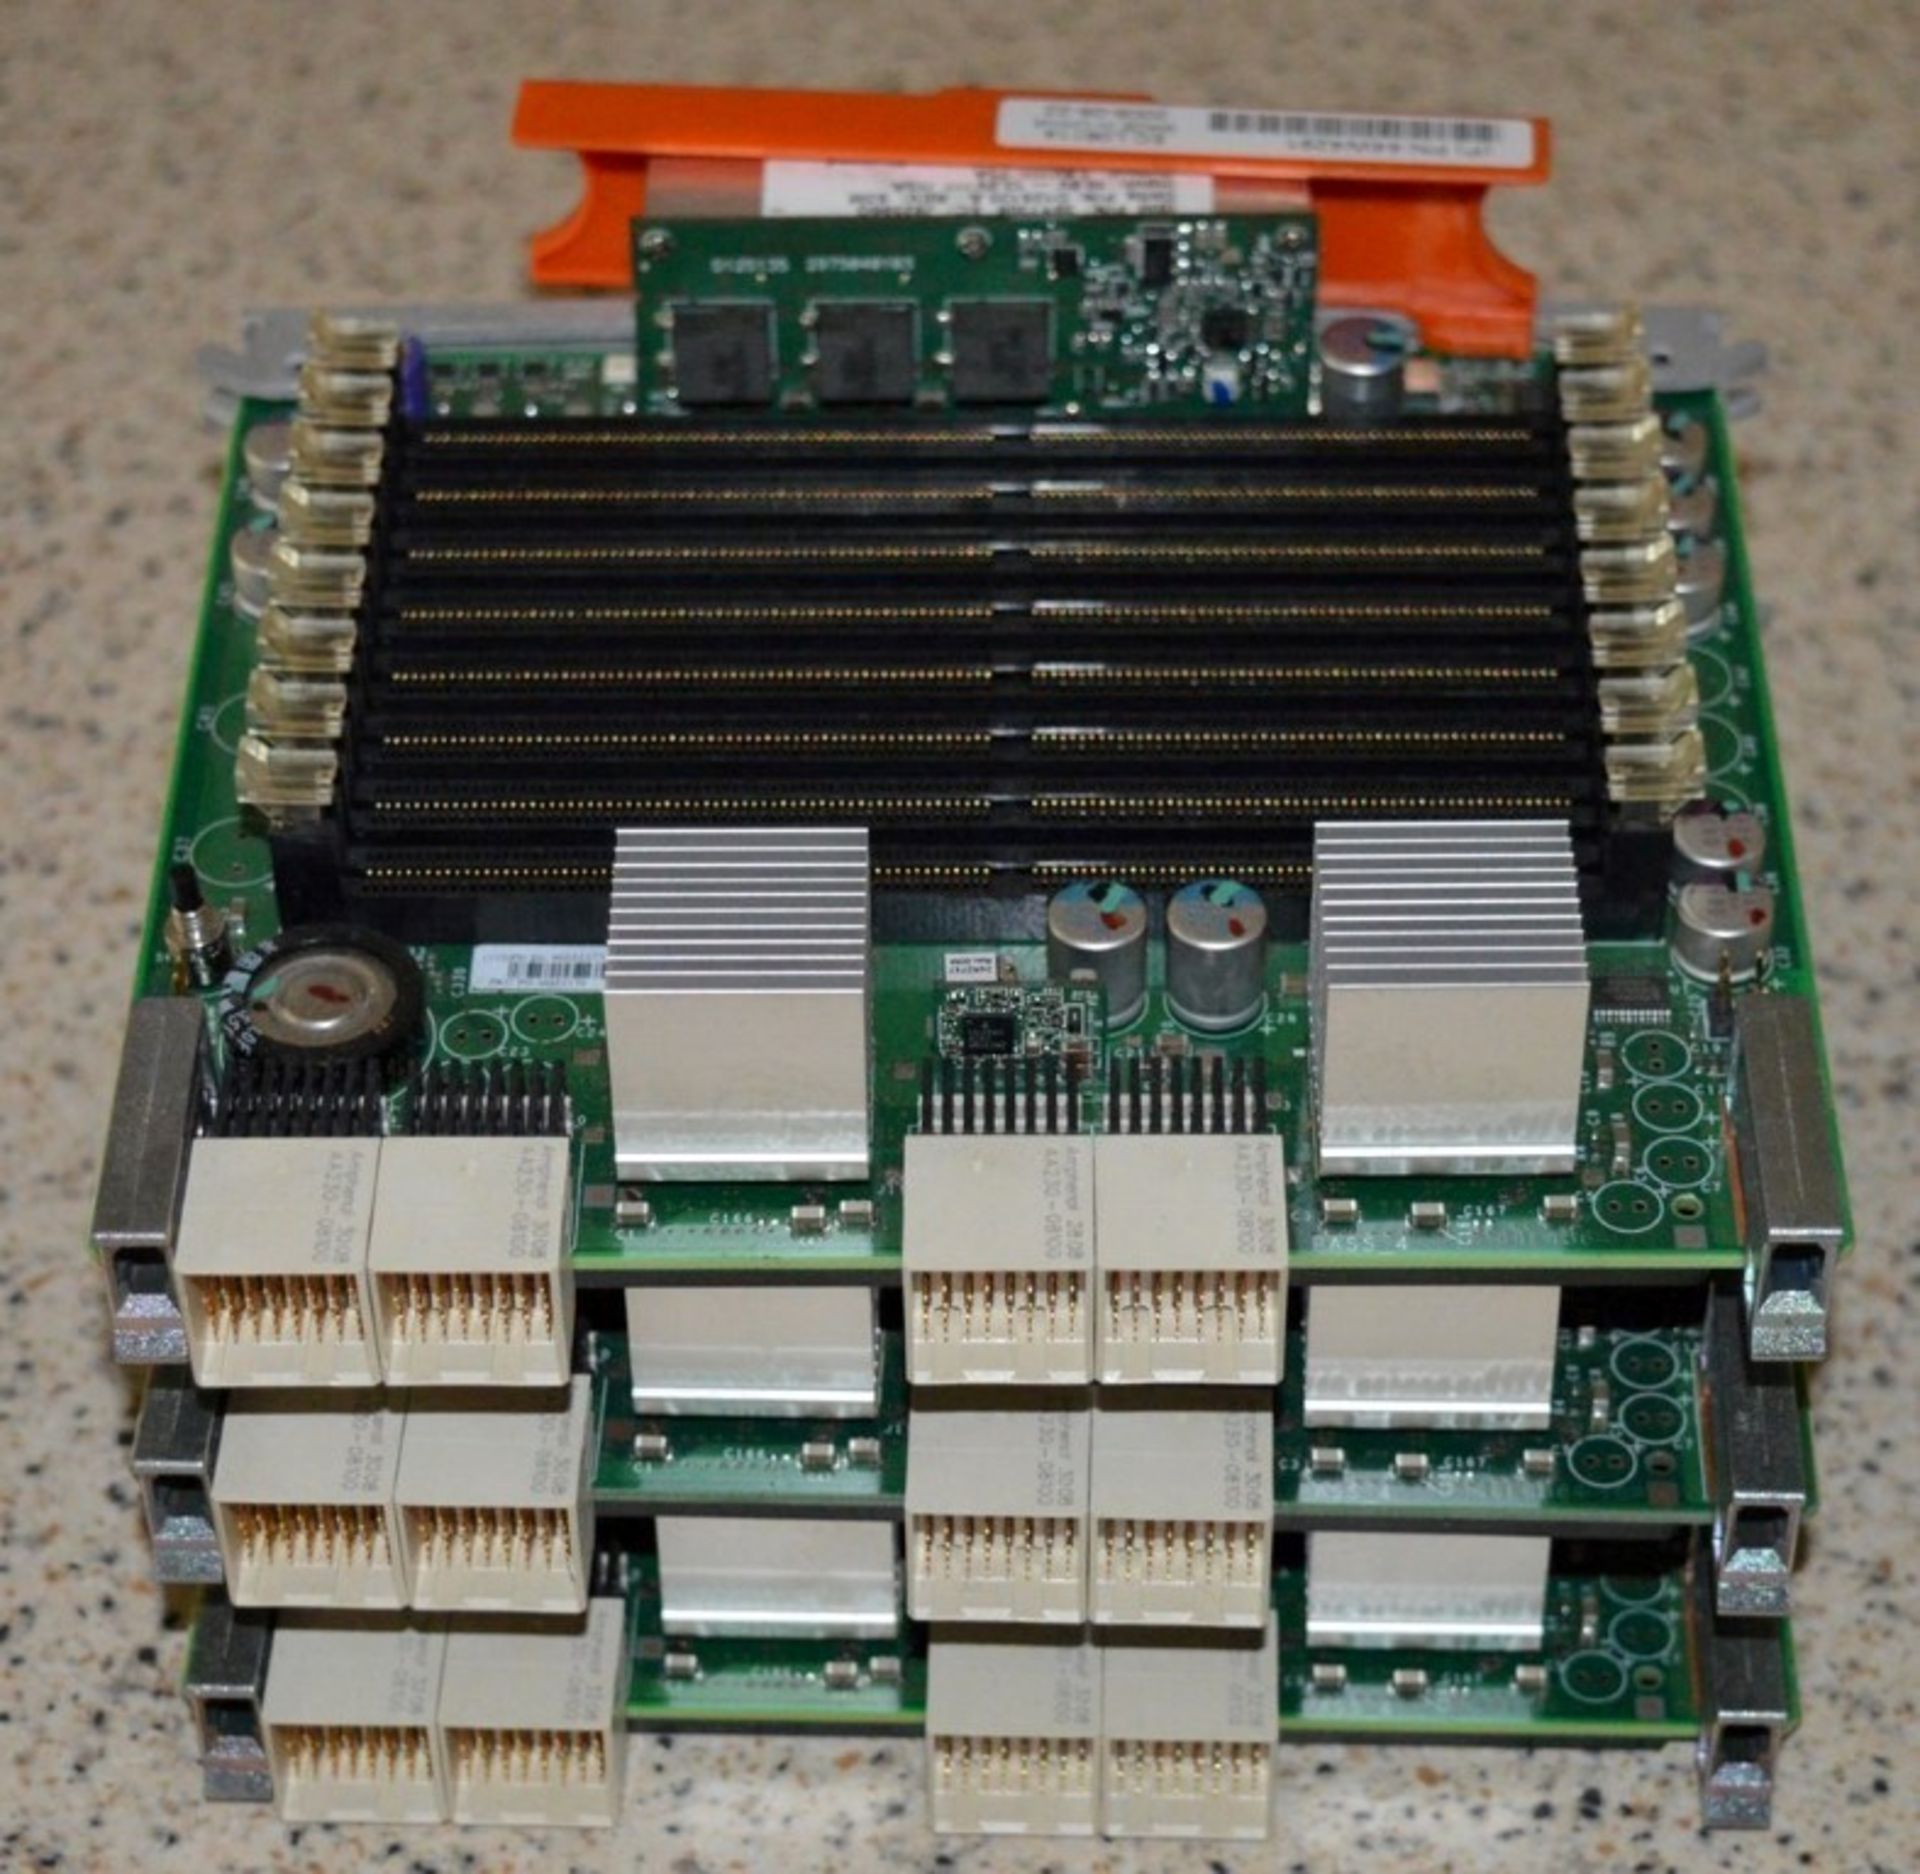 6 x IBM X-Series X3850 X3950 M2 Server RAM Expansion Modules - Part No: 44W4291 43W8672 - Removed - Image 4 of 4